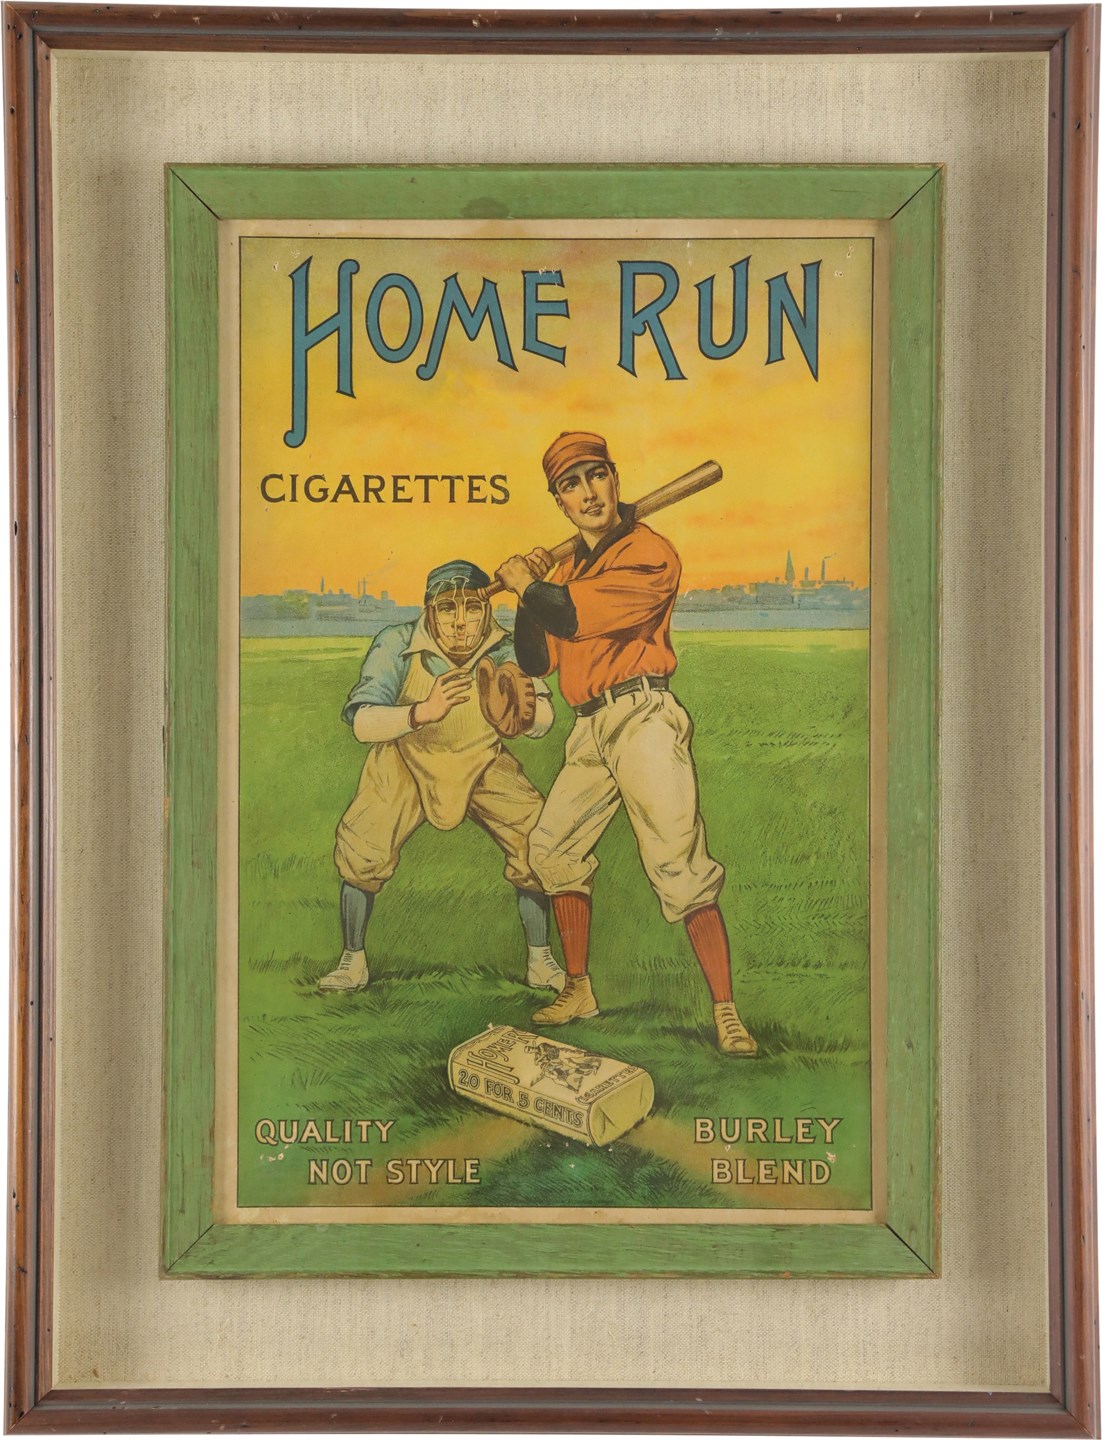 Baseball Memorabilia - Circa 1910s Home Run Cigarettes Advertising Poster in Original Frame